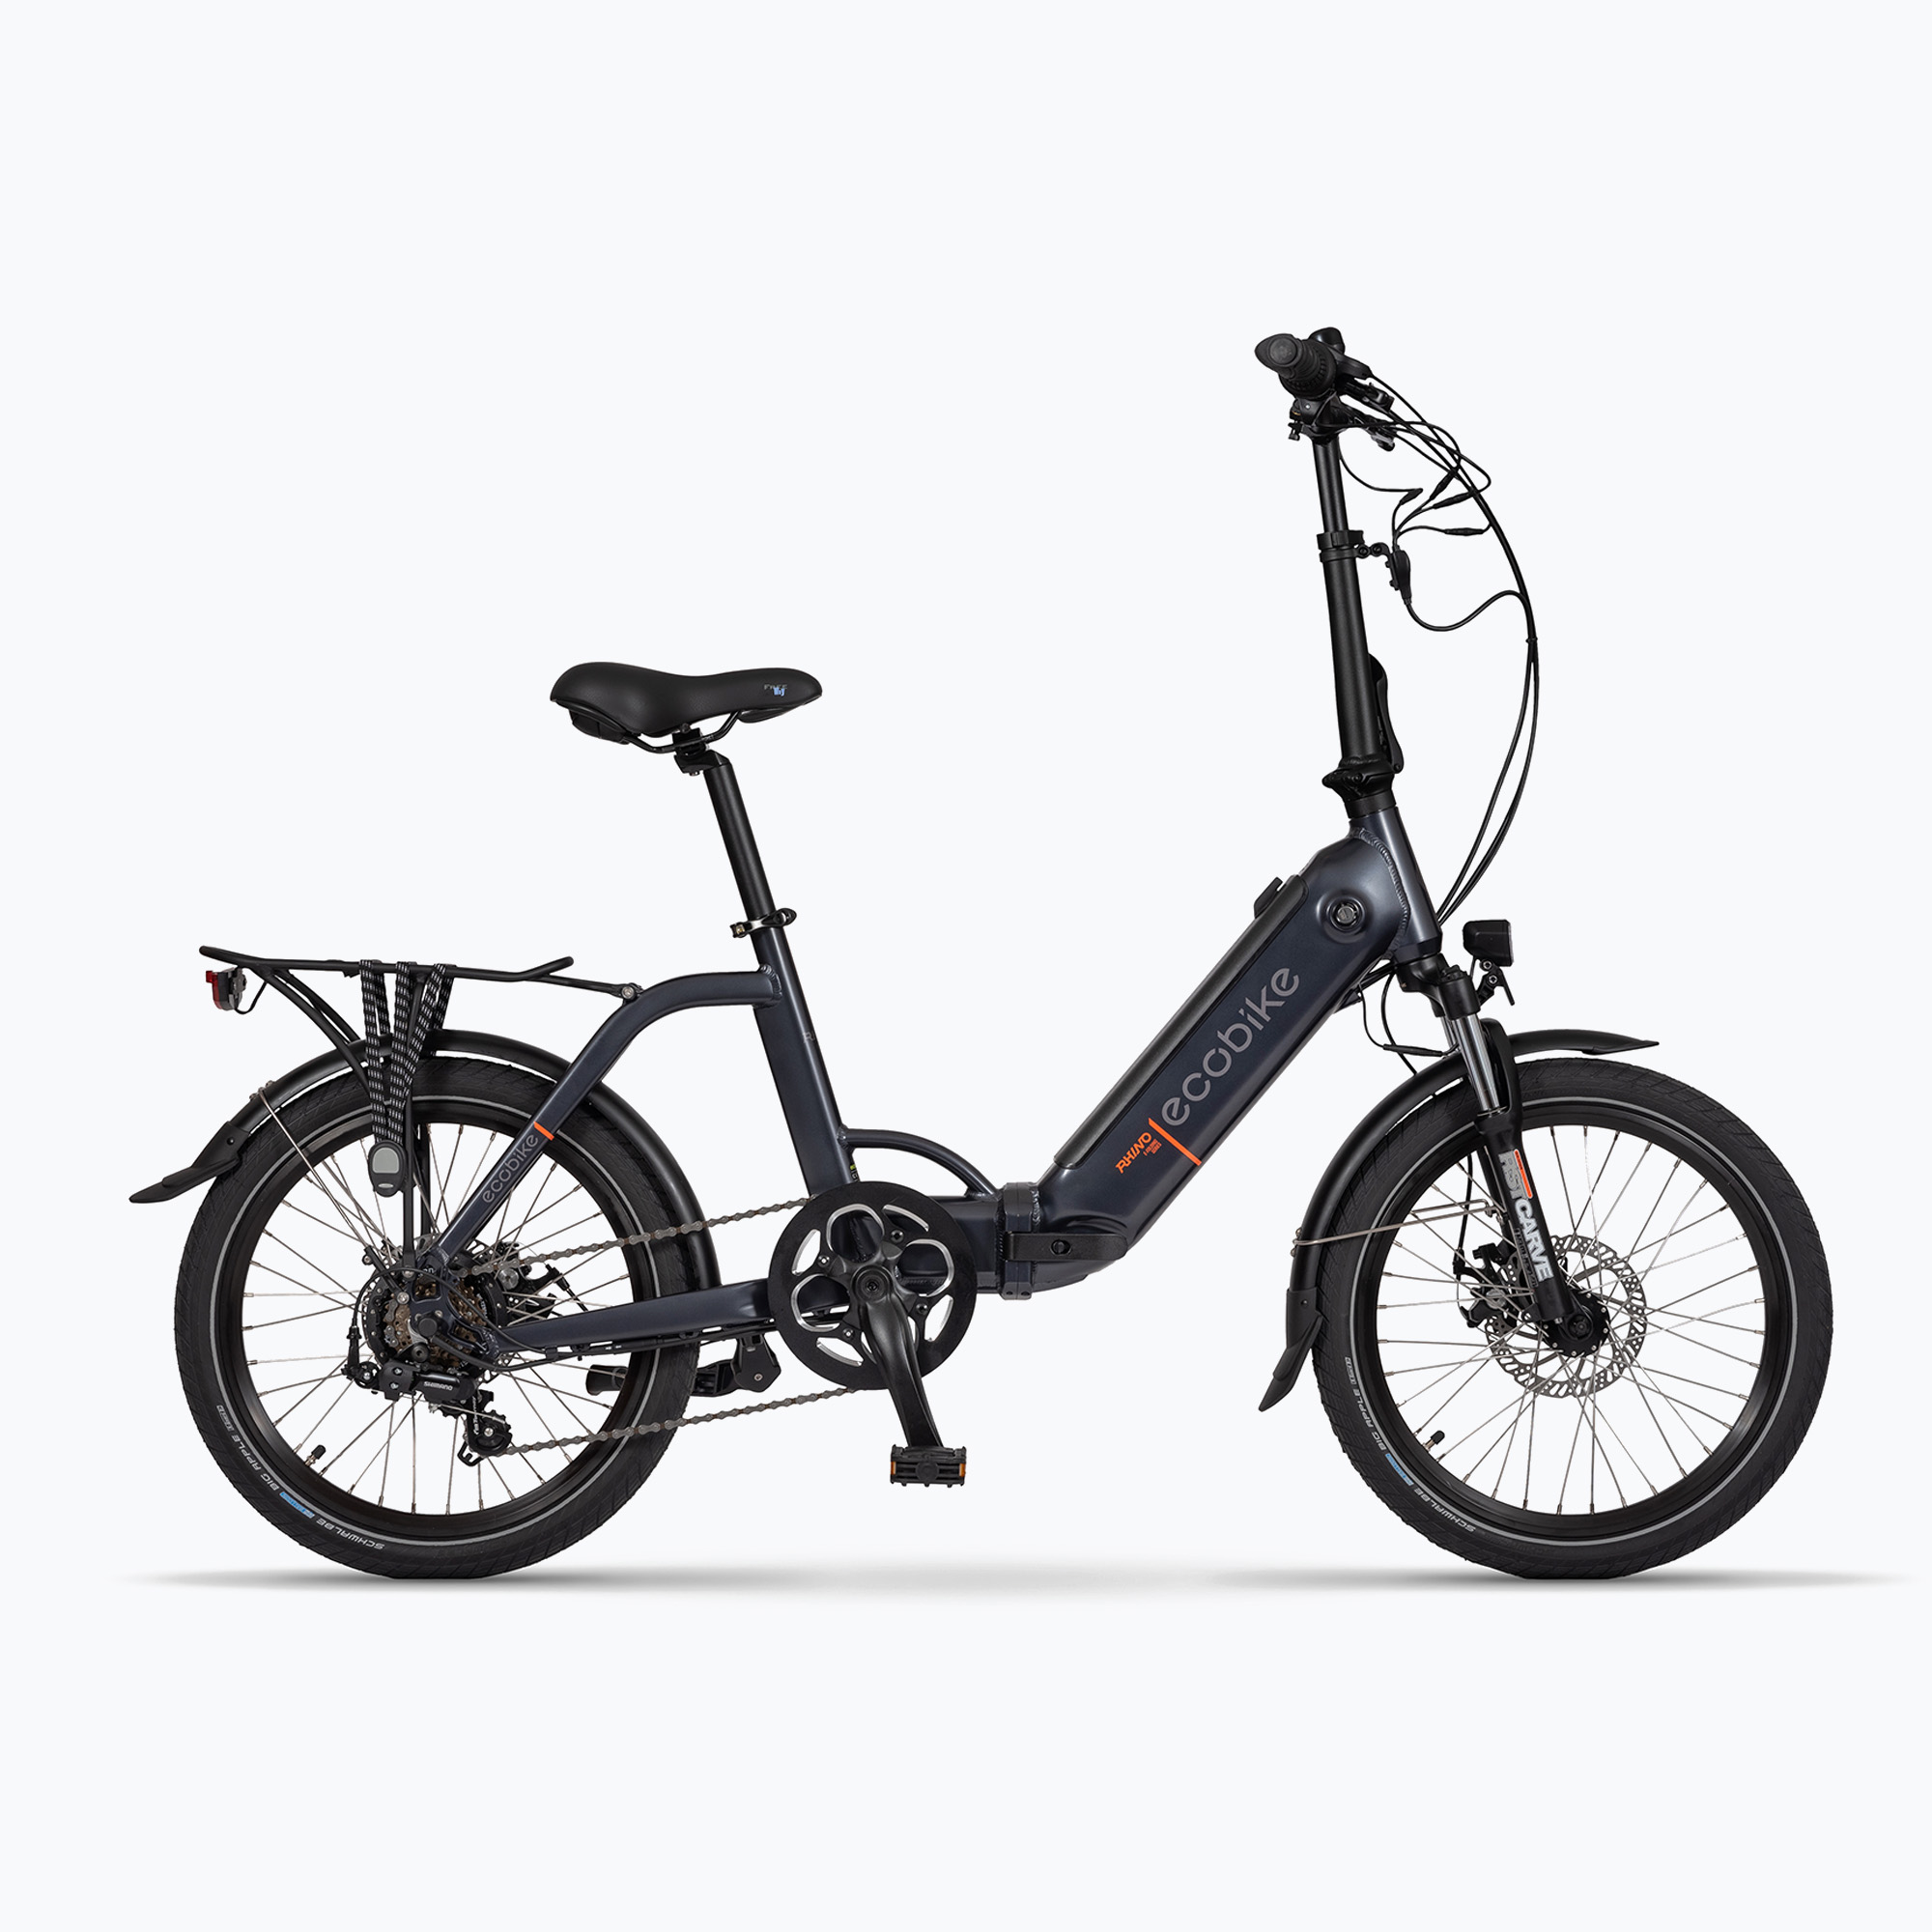 EcoBike Rhino/Rhino LG 16 Ah Smart BMS електрически велосипед черен 1010203